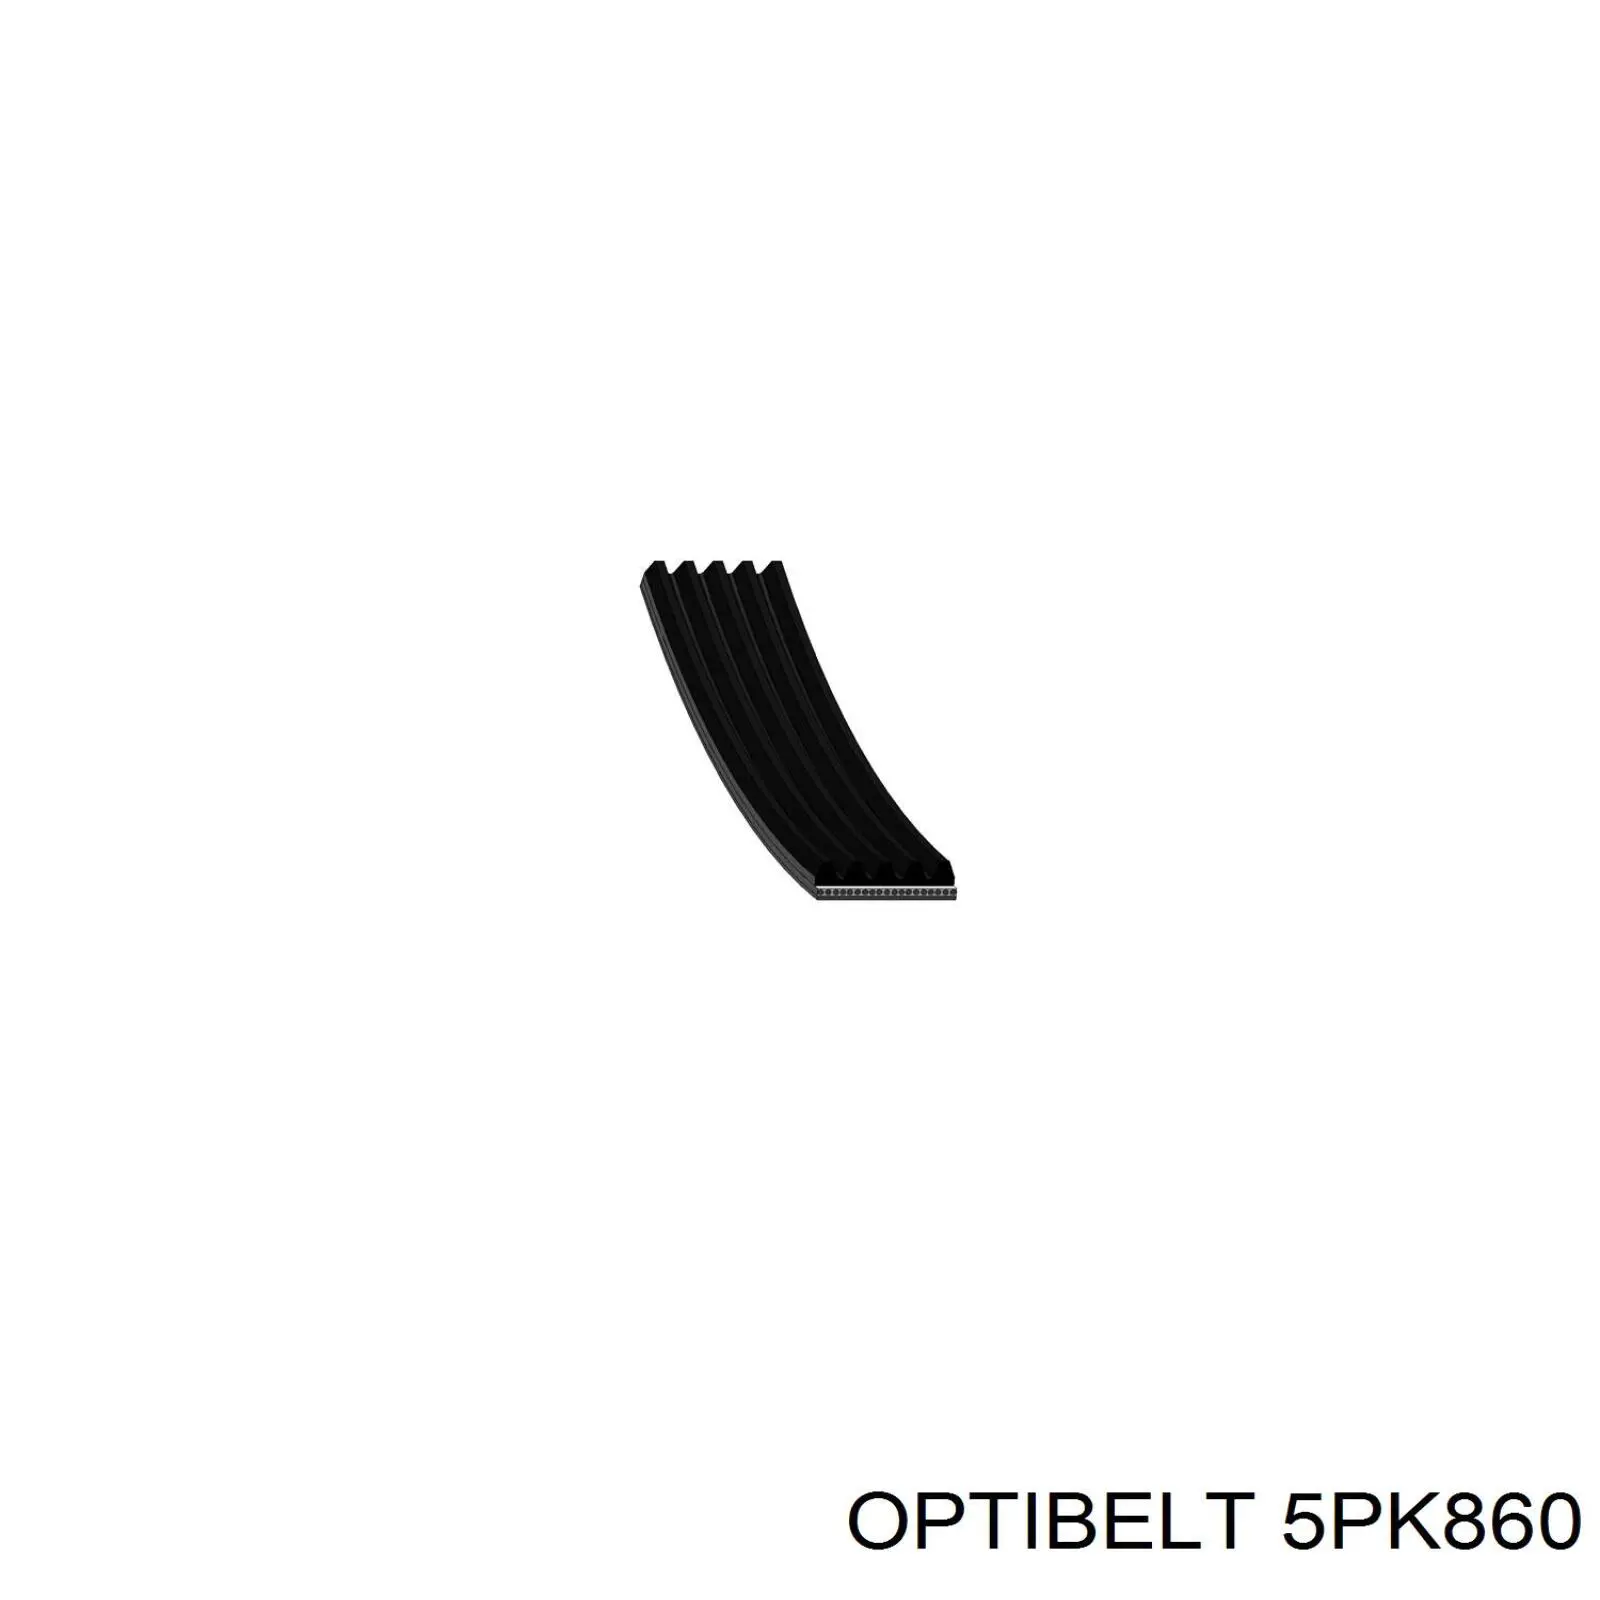 5PK860 Optibelt correa trapezoidal